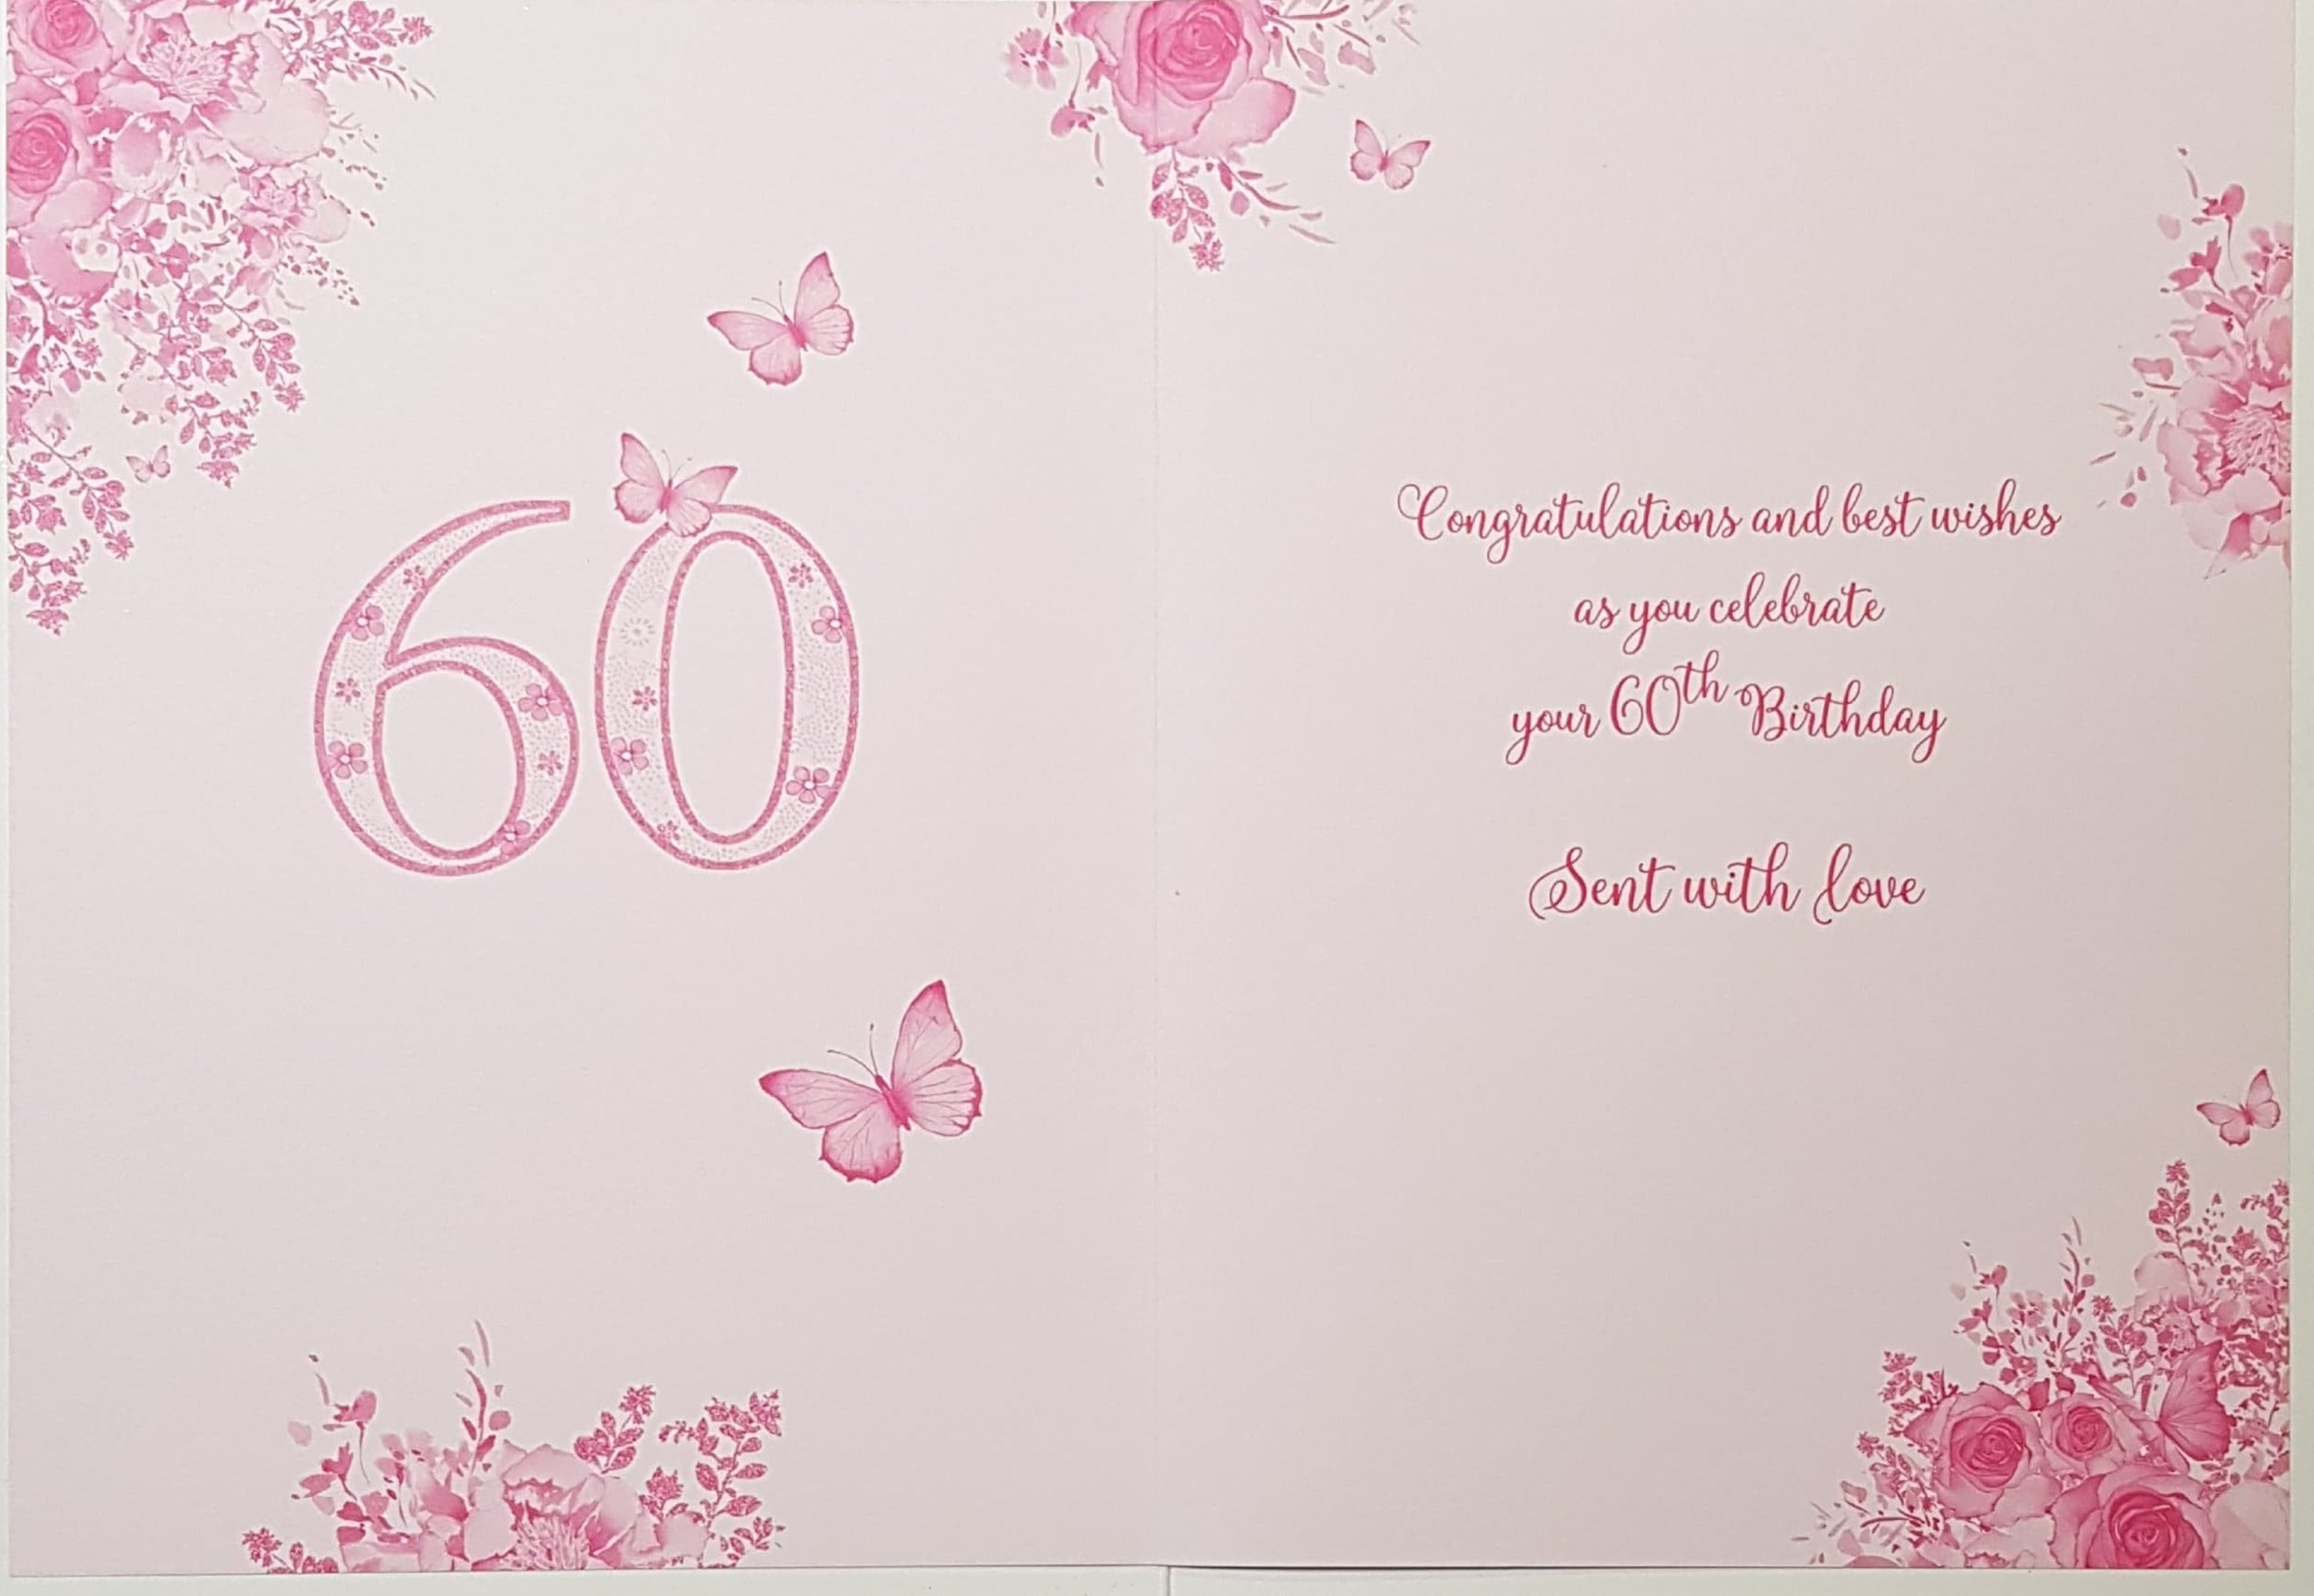 Age 60 Birthday Card - Pink Rose Bush & Butterflies